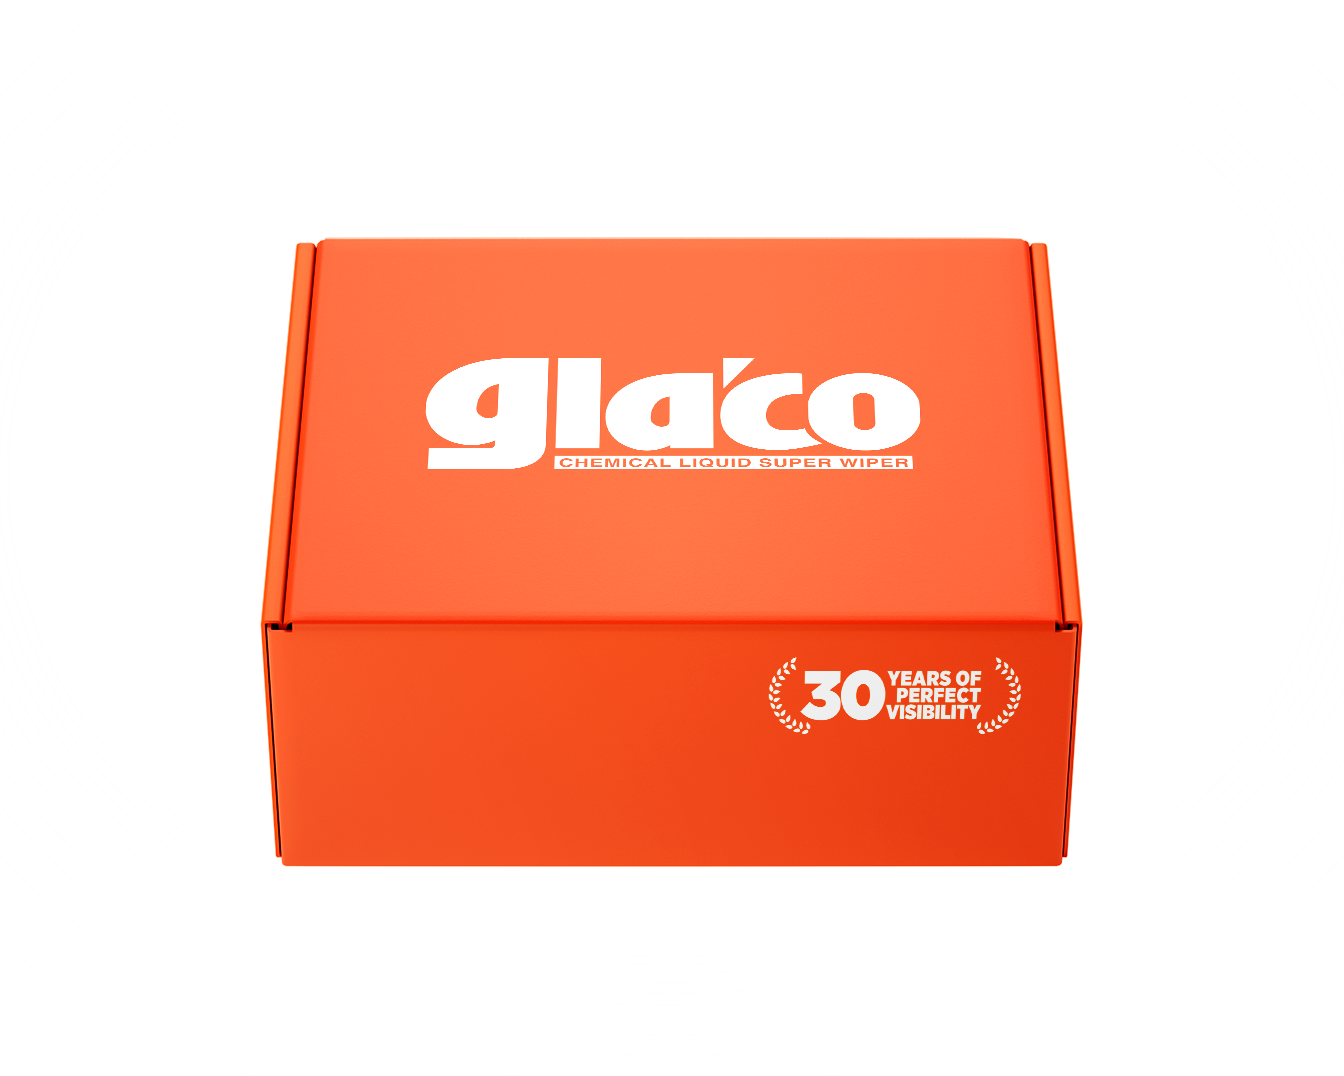 Glaco Ultra V Glaco DX  Detailing product comparison 